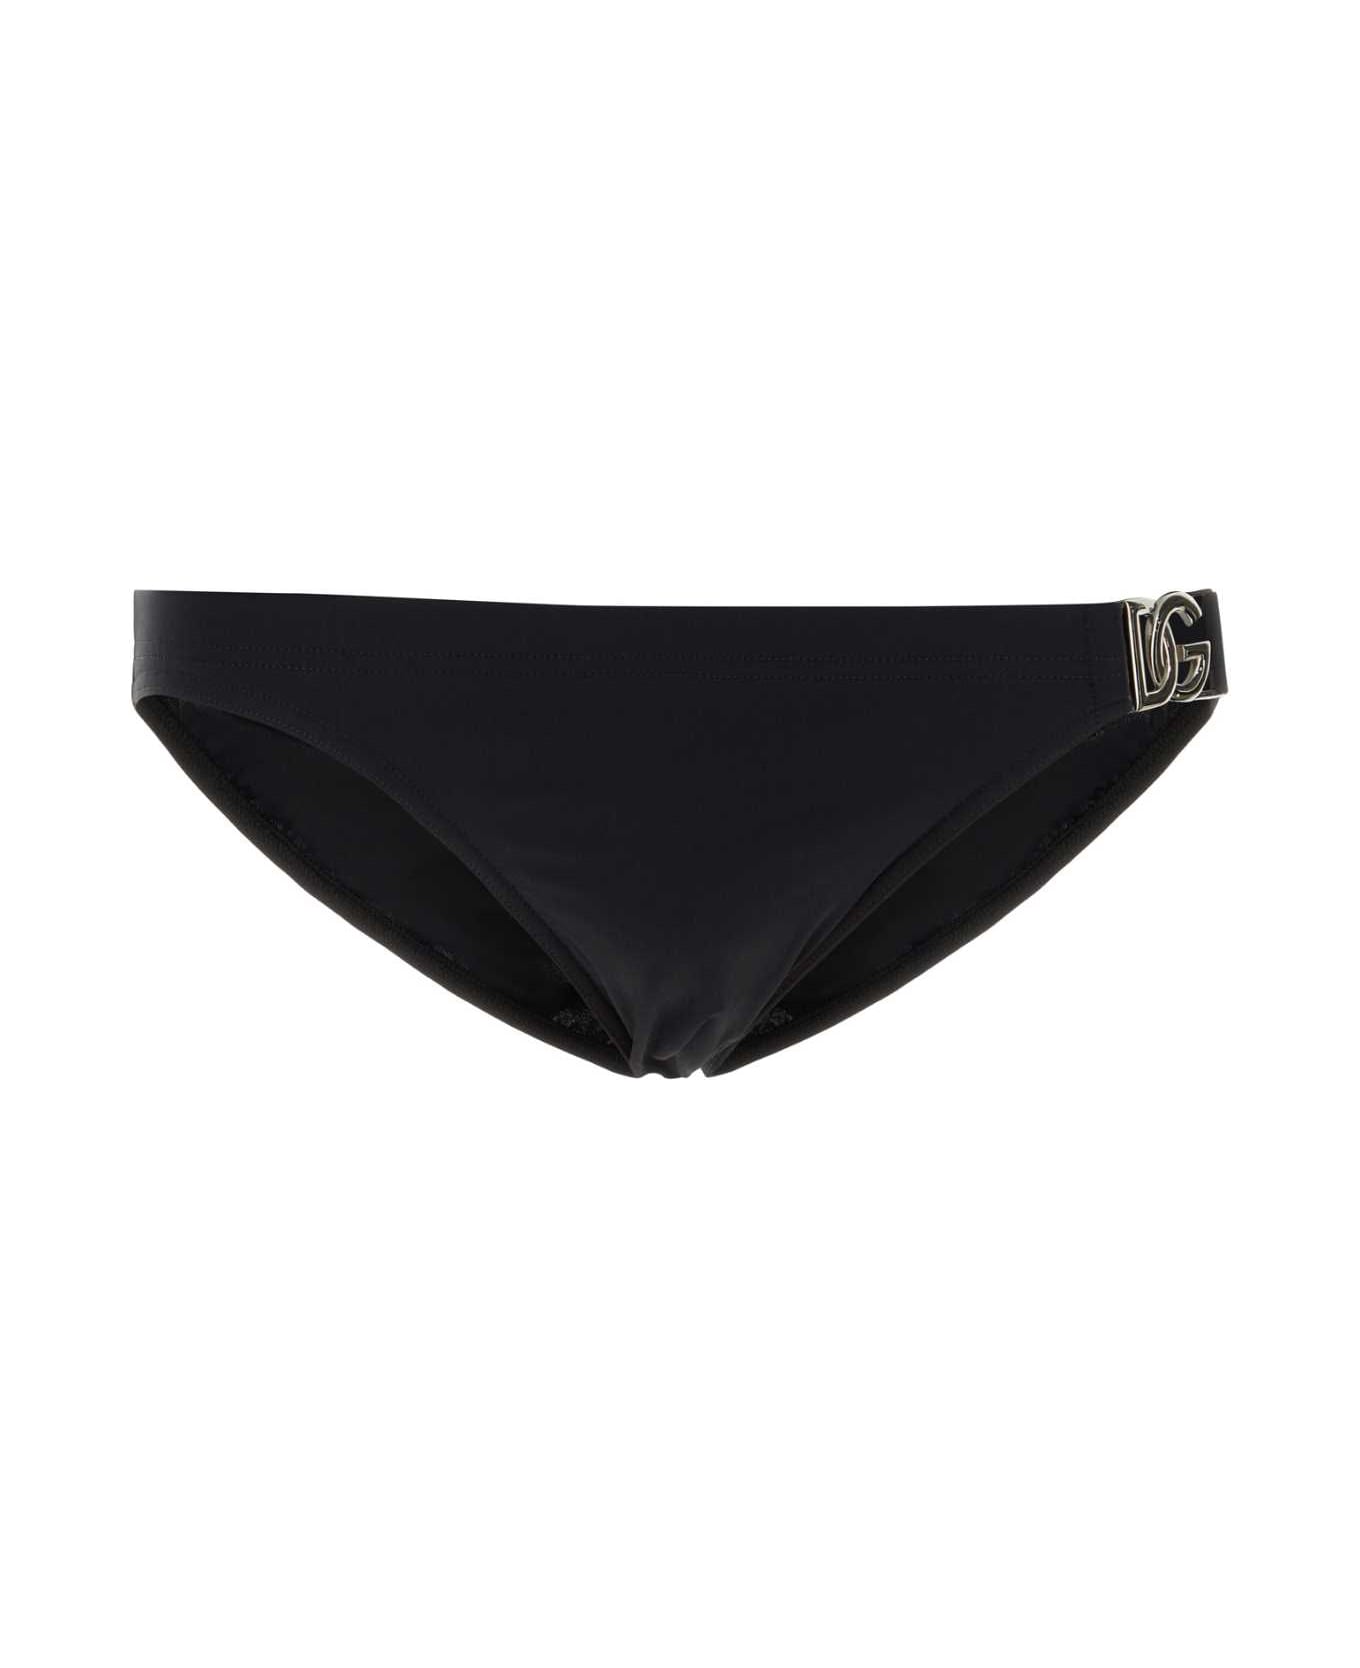 Dolce & Gabbana Black Stretch Nylon Swimming Brief - N0000